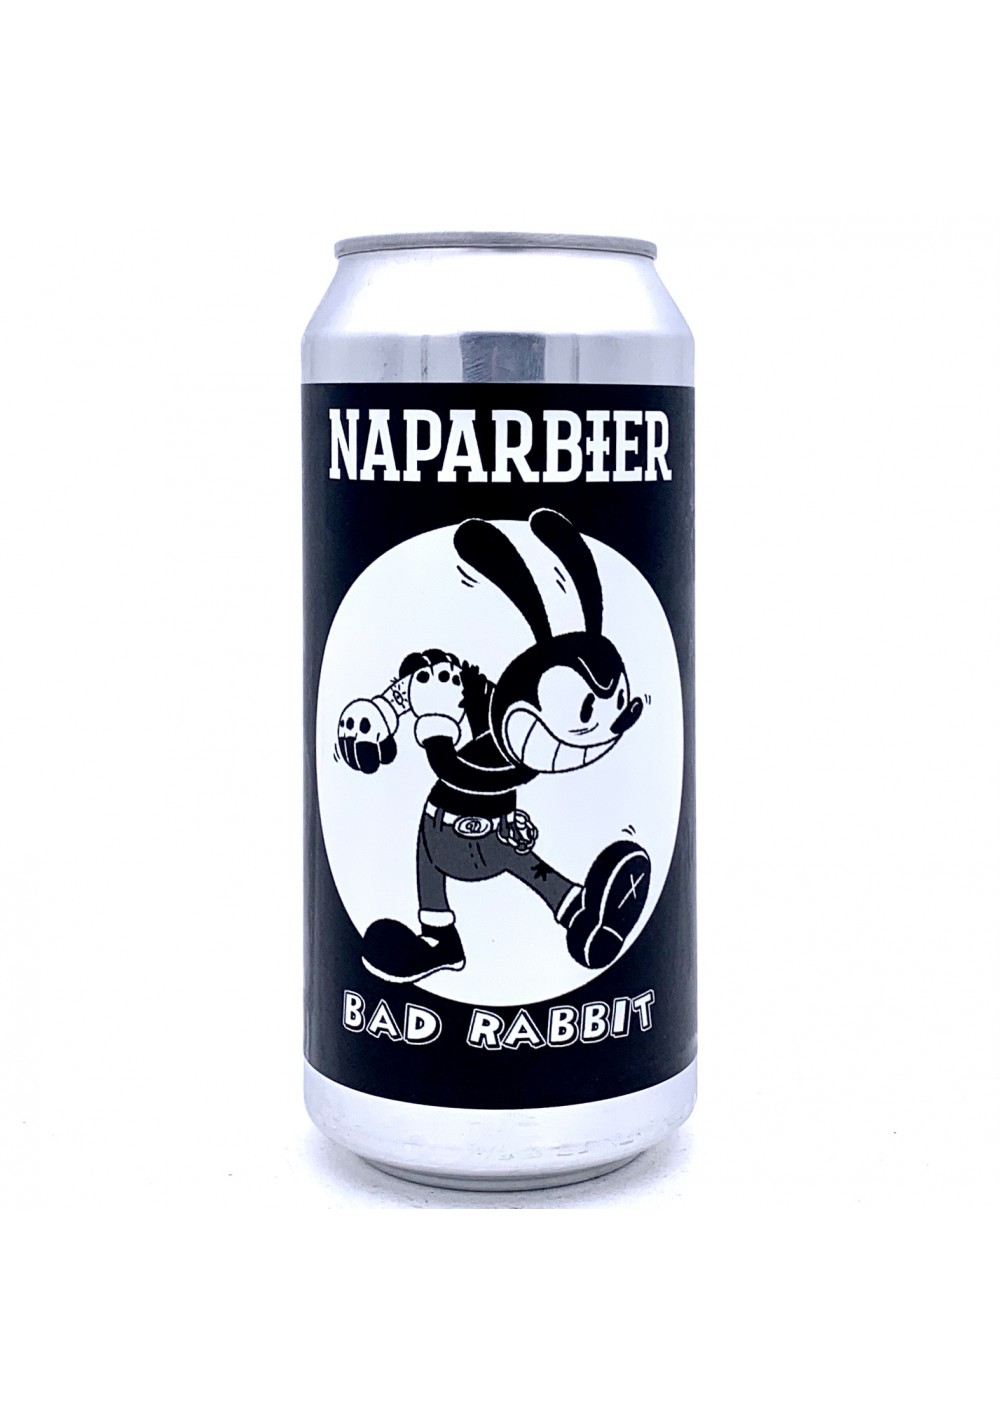 Naparbier - Bad Rabbit | Hefeweizen